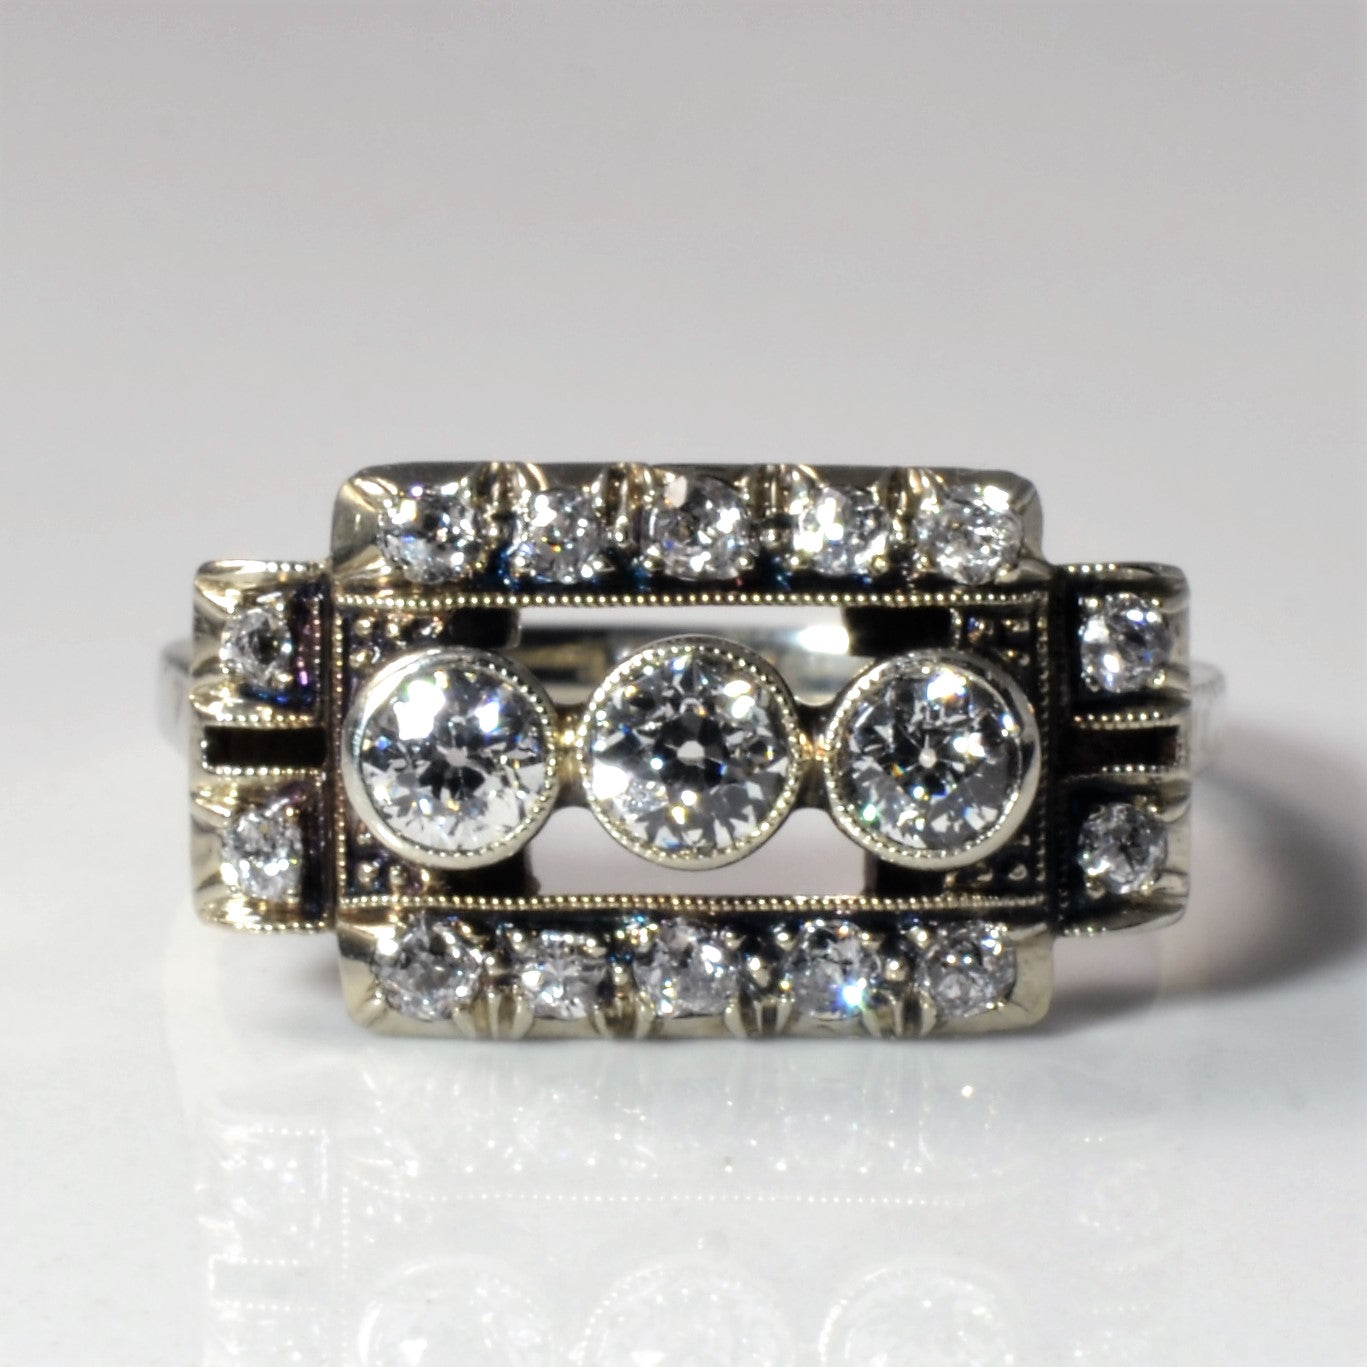 Elegant Art Deco Era Diamond Cocktail Ring | 0.99ctw | SZ 8.5 |